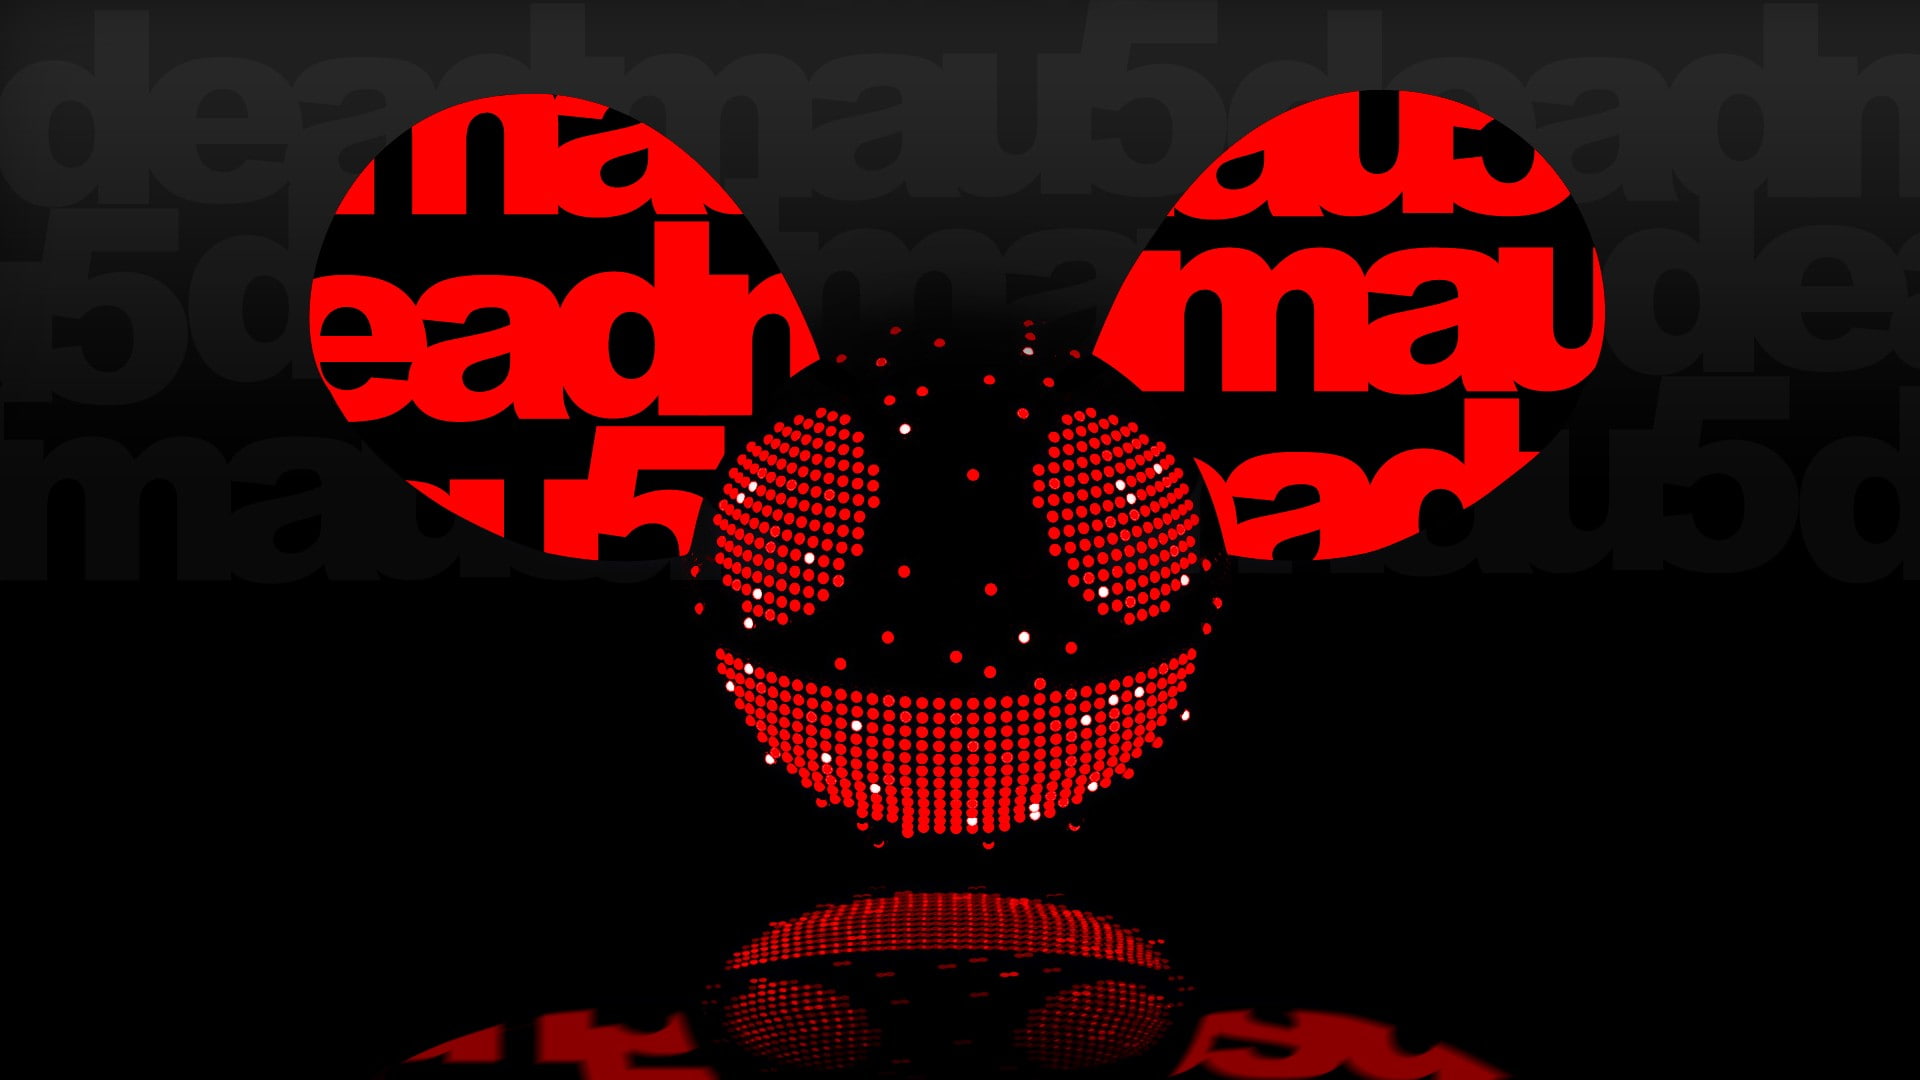 deadmau5, red, communication, text, illuminated, indoors, close-up